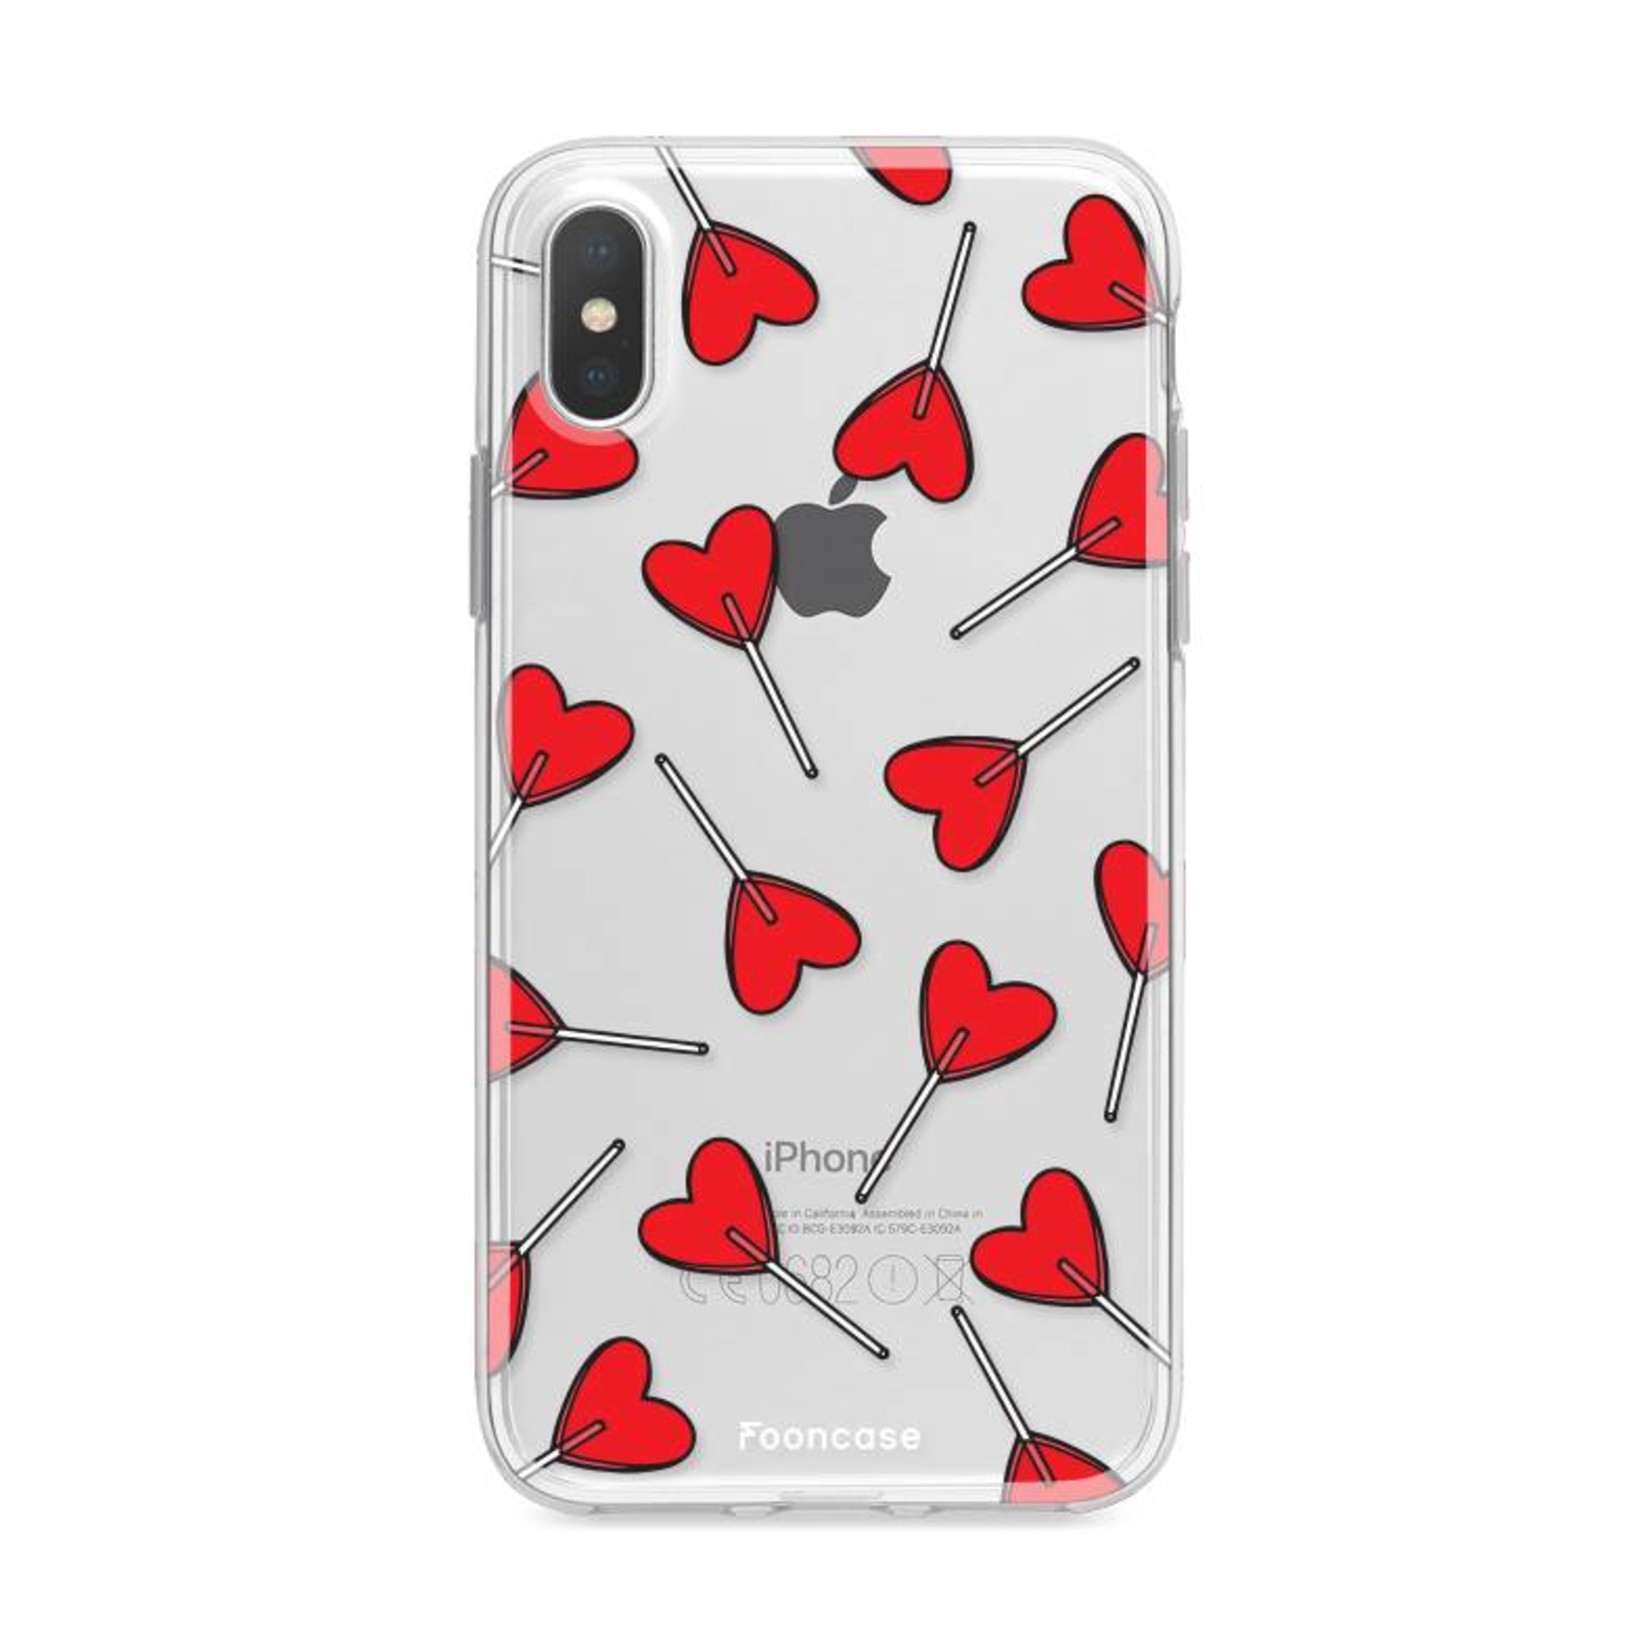 FOONCASE Iphone XS Max Cover - Love Pop